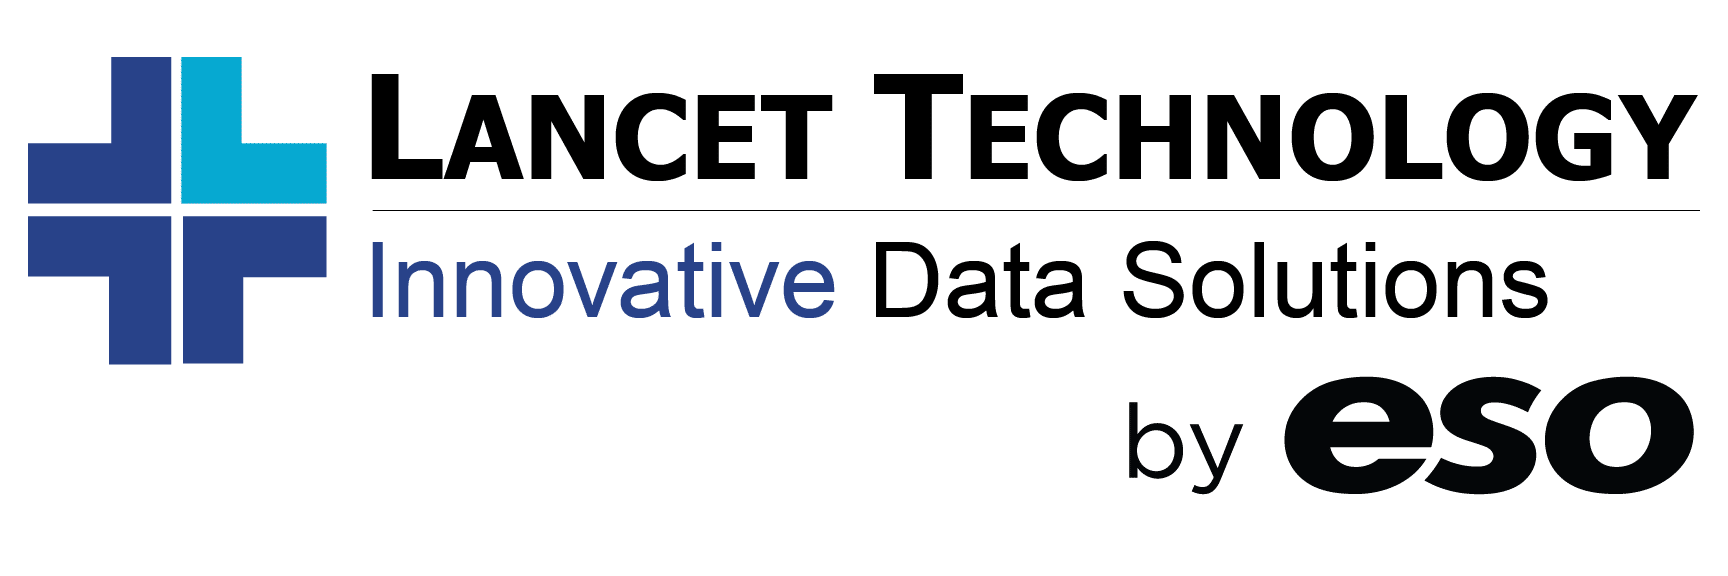 Lancet Technology by ESO logo.